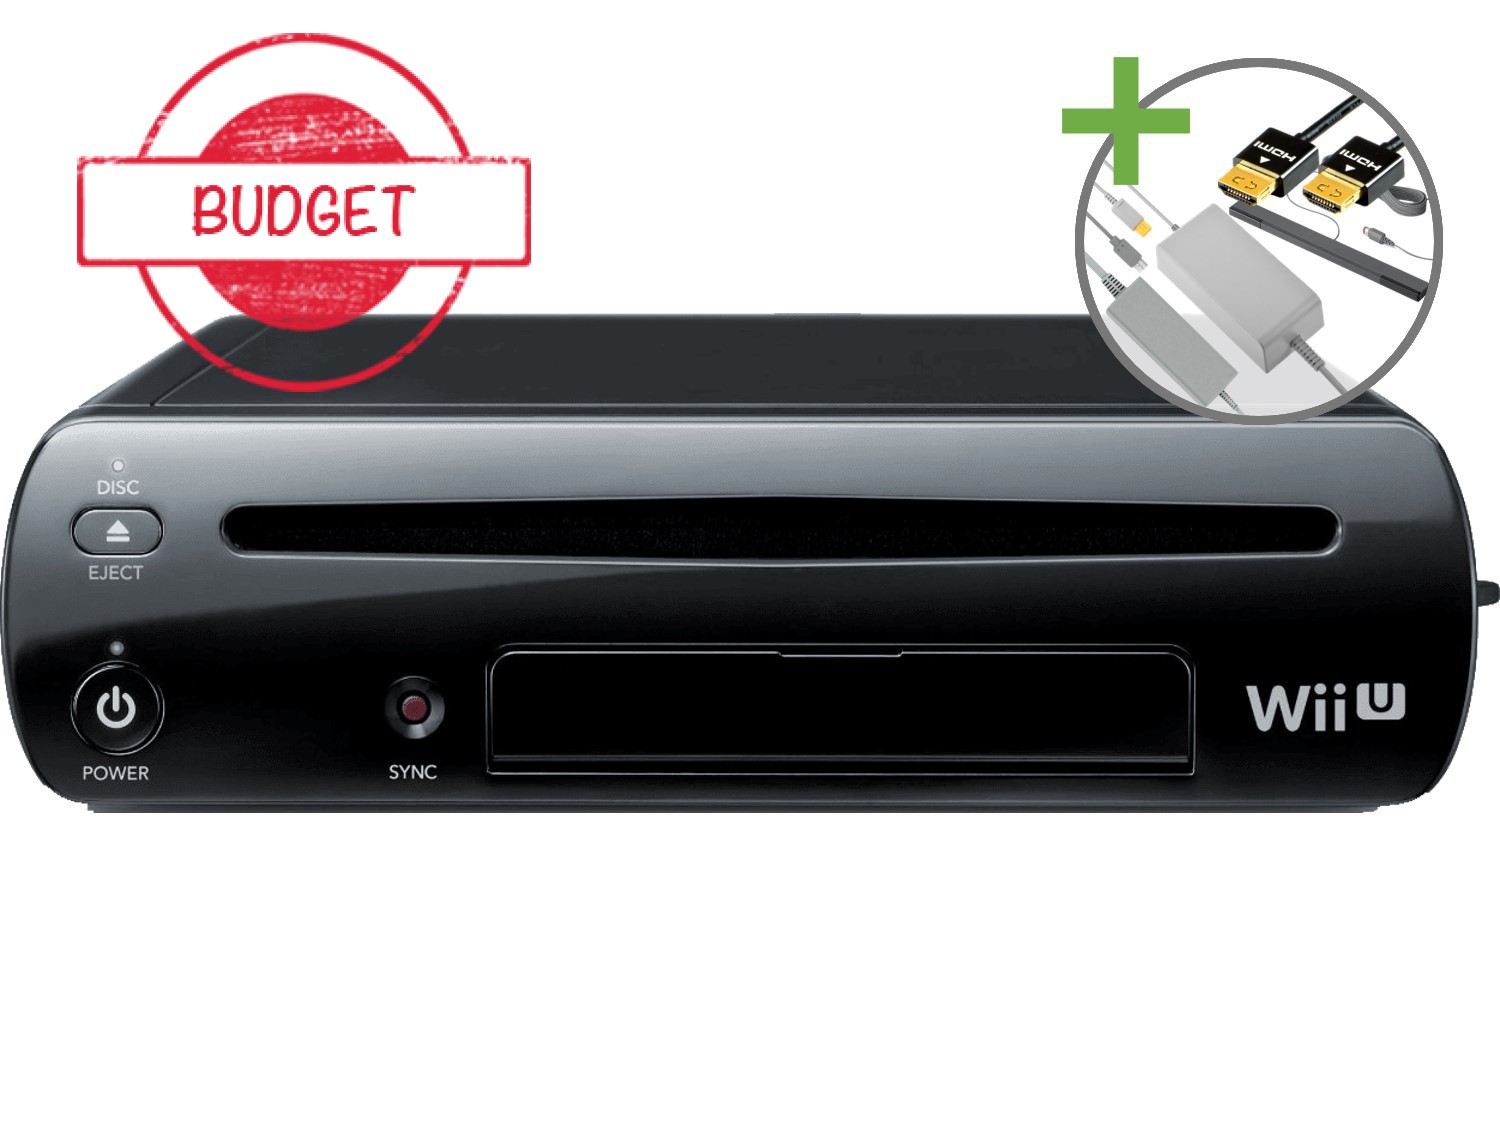 Nintendo Wii U Starter Pack - Mario Kart 8 Edition - Budget - Wii U Hardware - 3